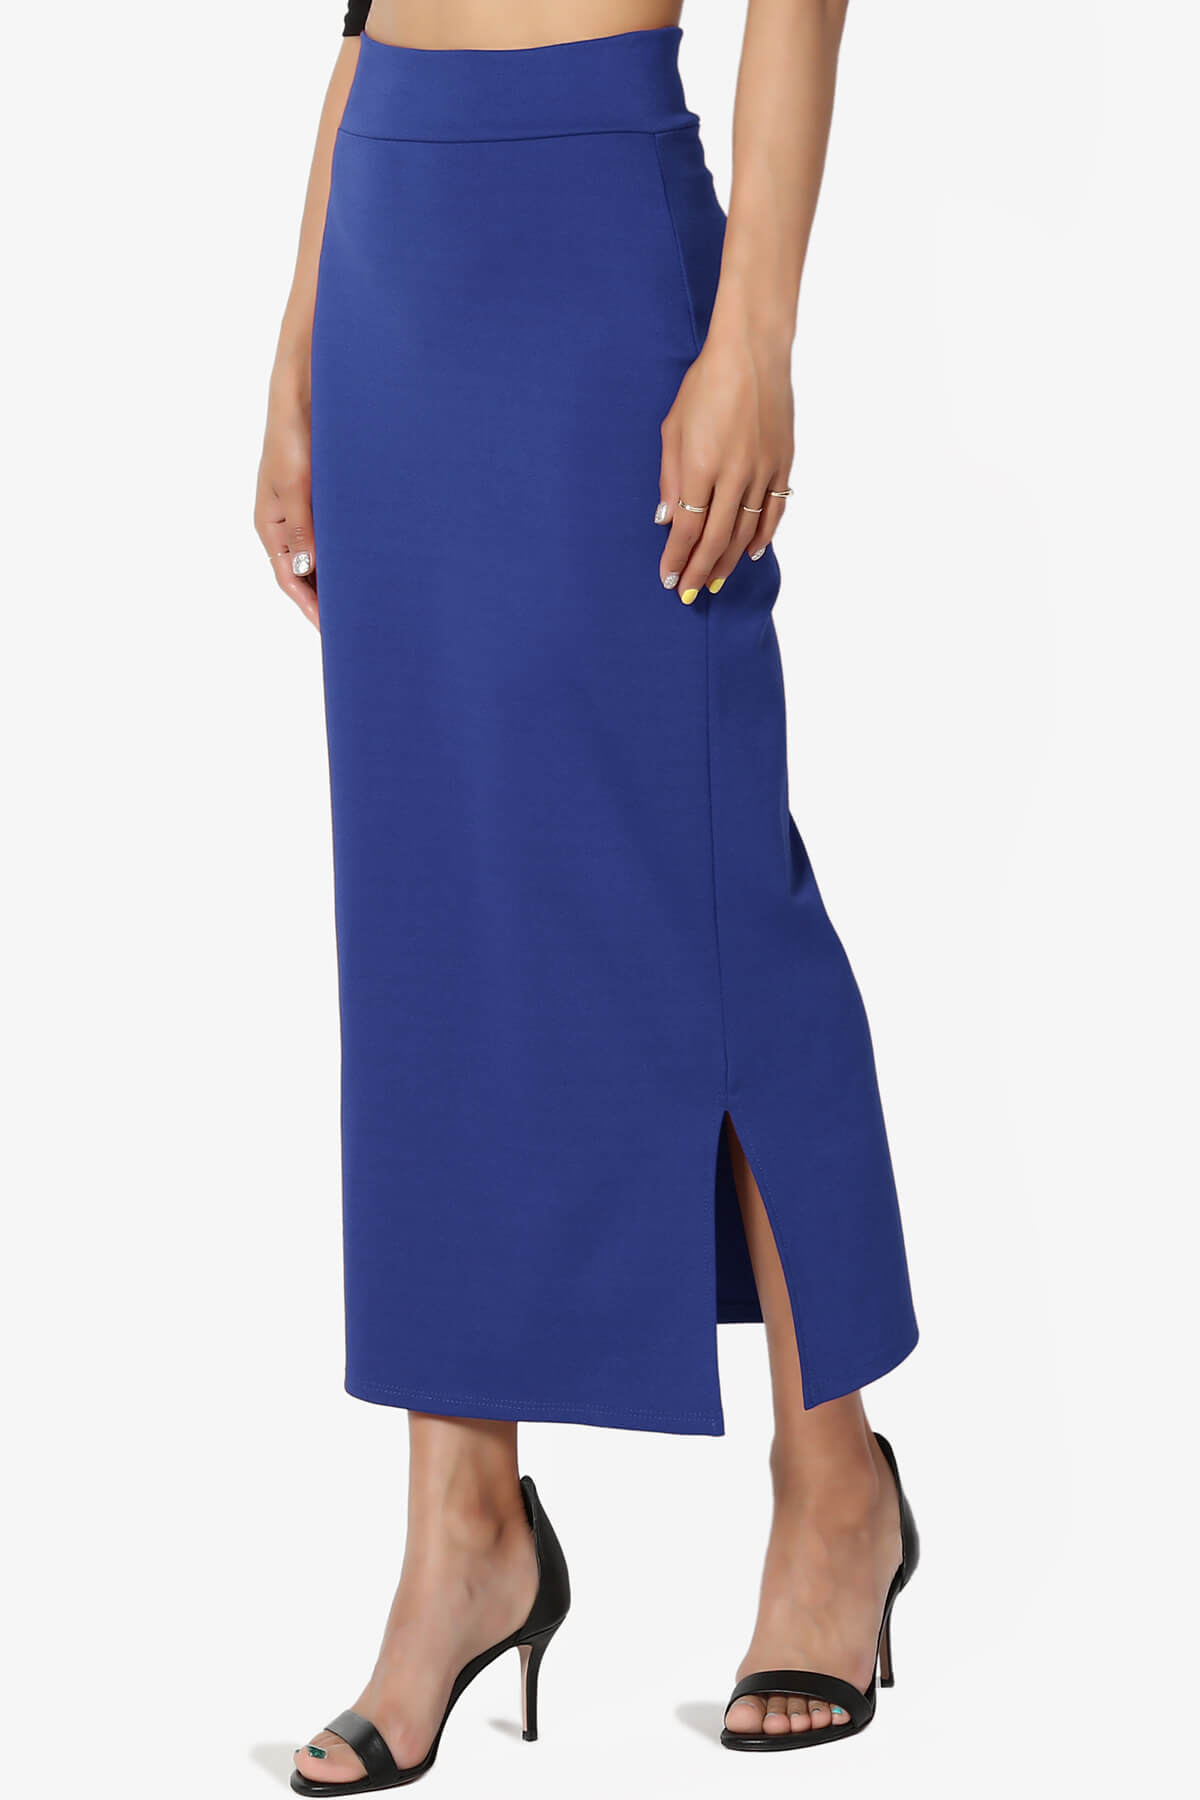 Carleta Mid Calf Pencil Skirt ROYAL BLUE_3